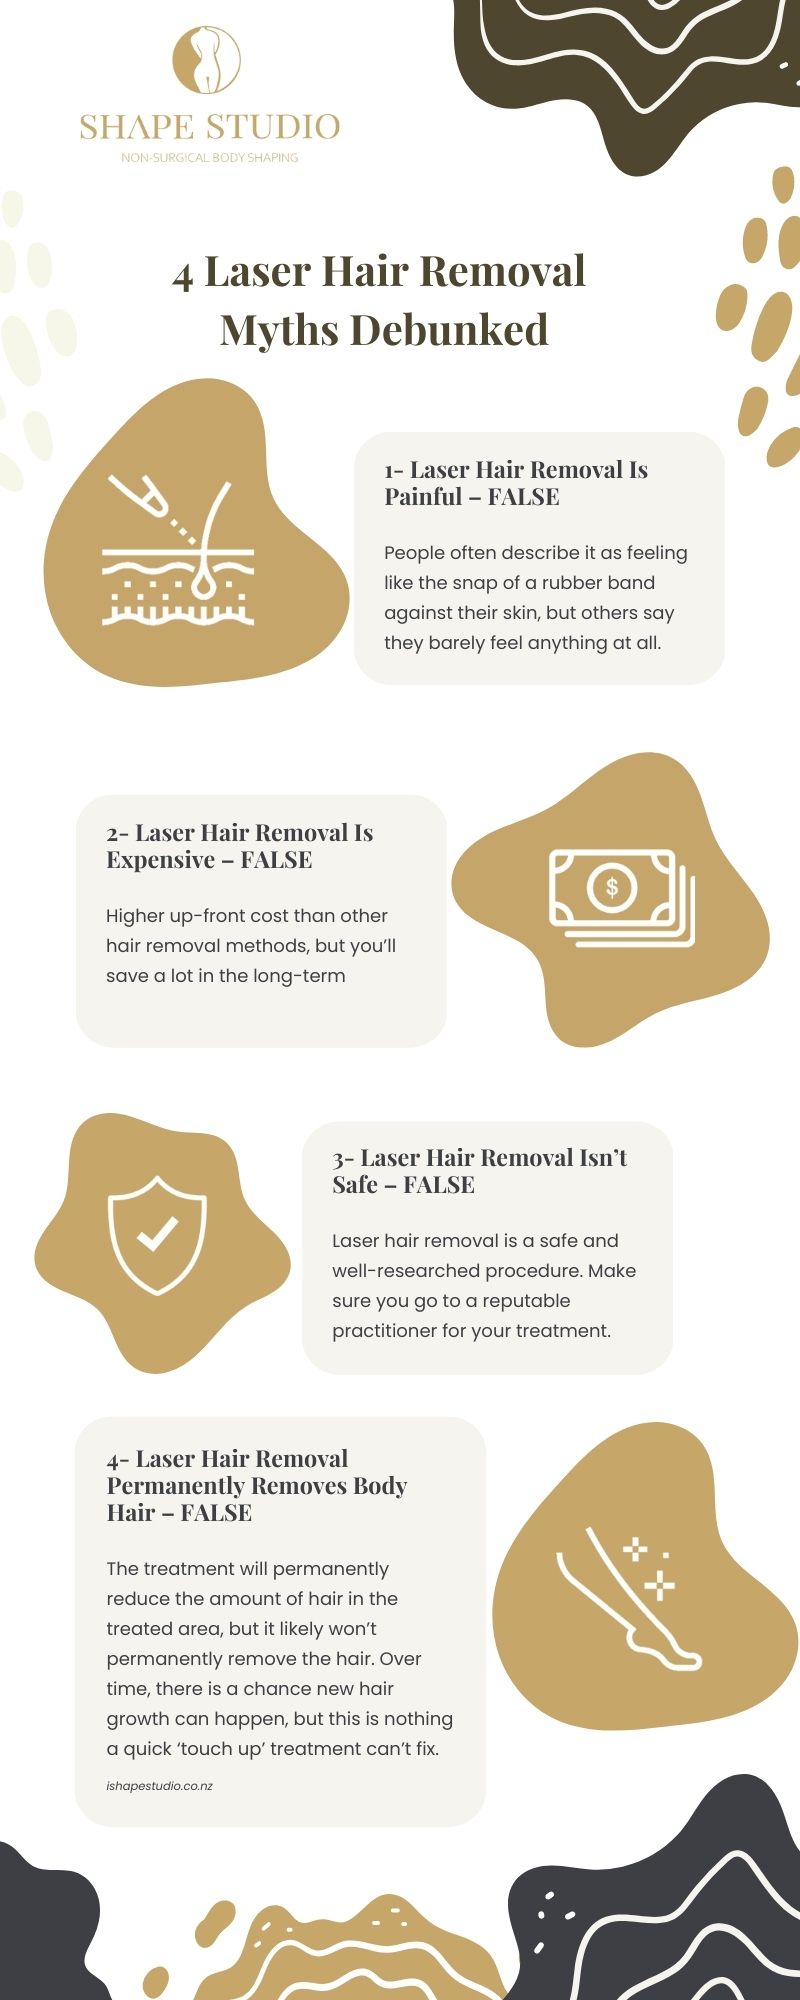 Shape Studio 4 Laser Hair Removal Myths Debunked Infographic